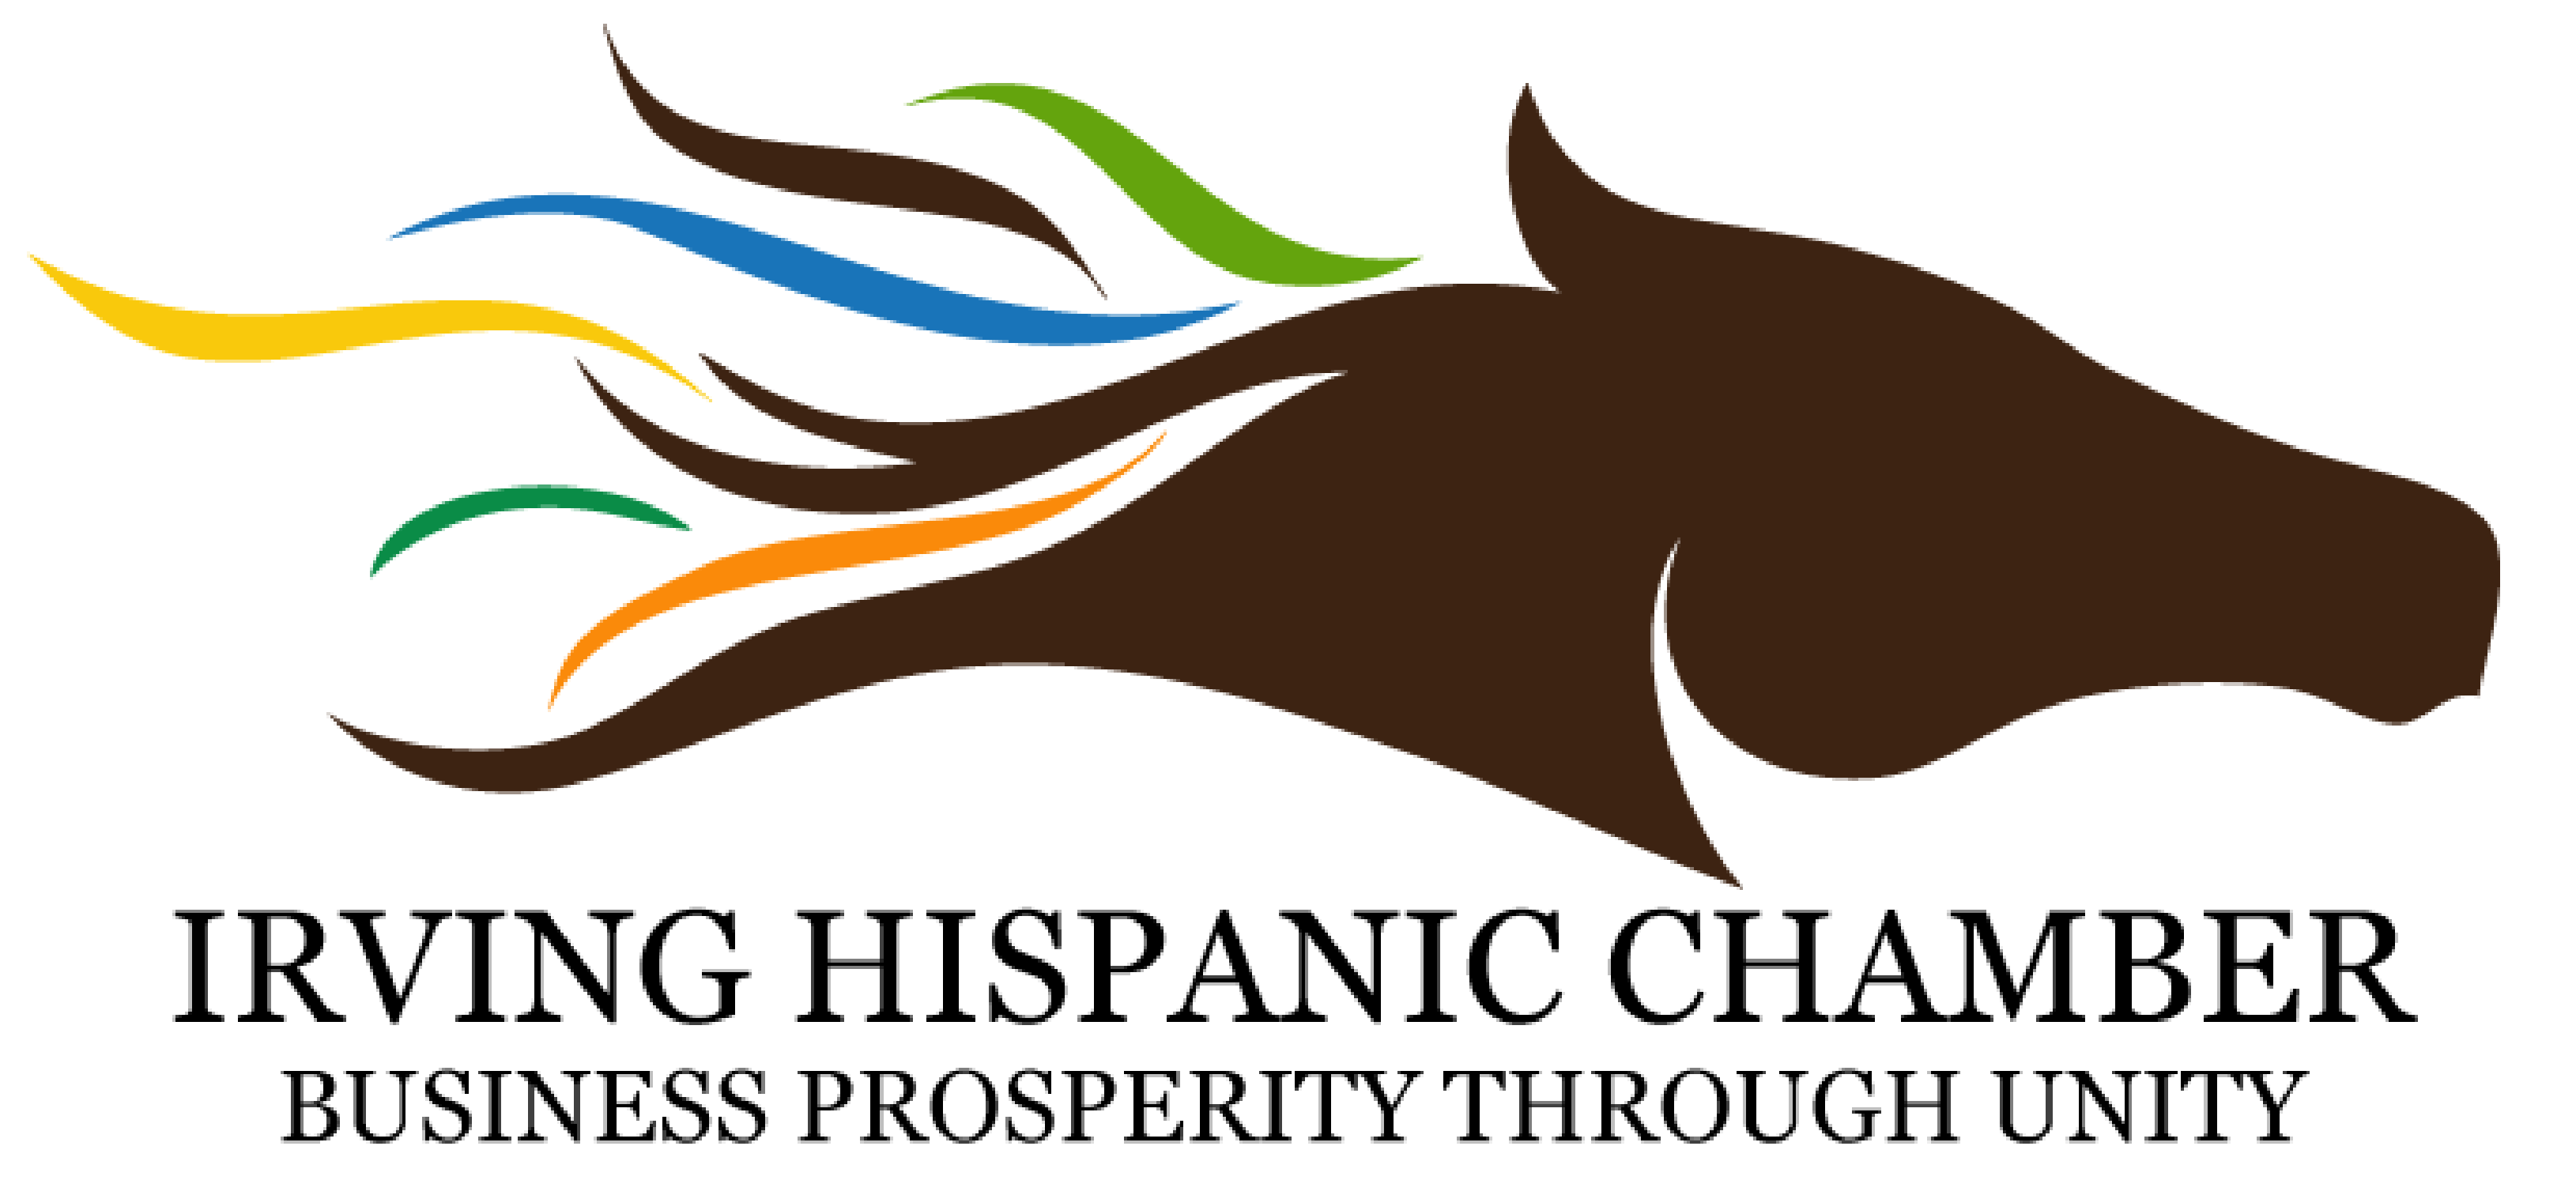 Commerce Logo - Events Archive - Irving Hispanic Chamber of Commerce